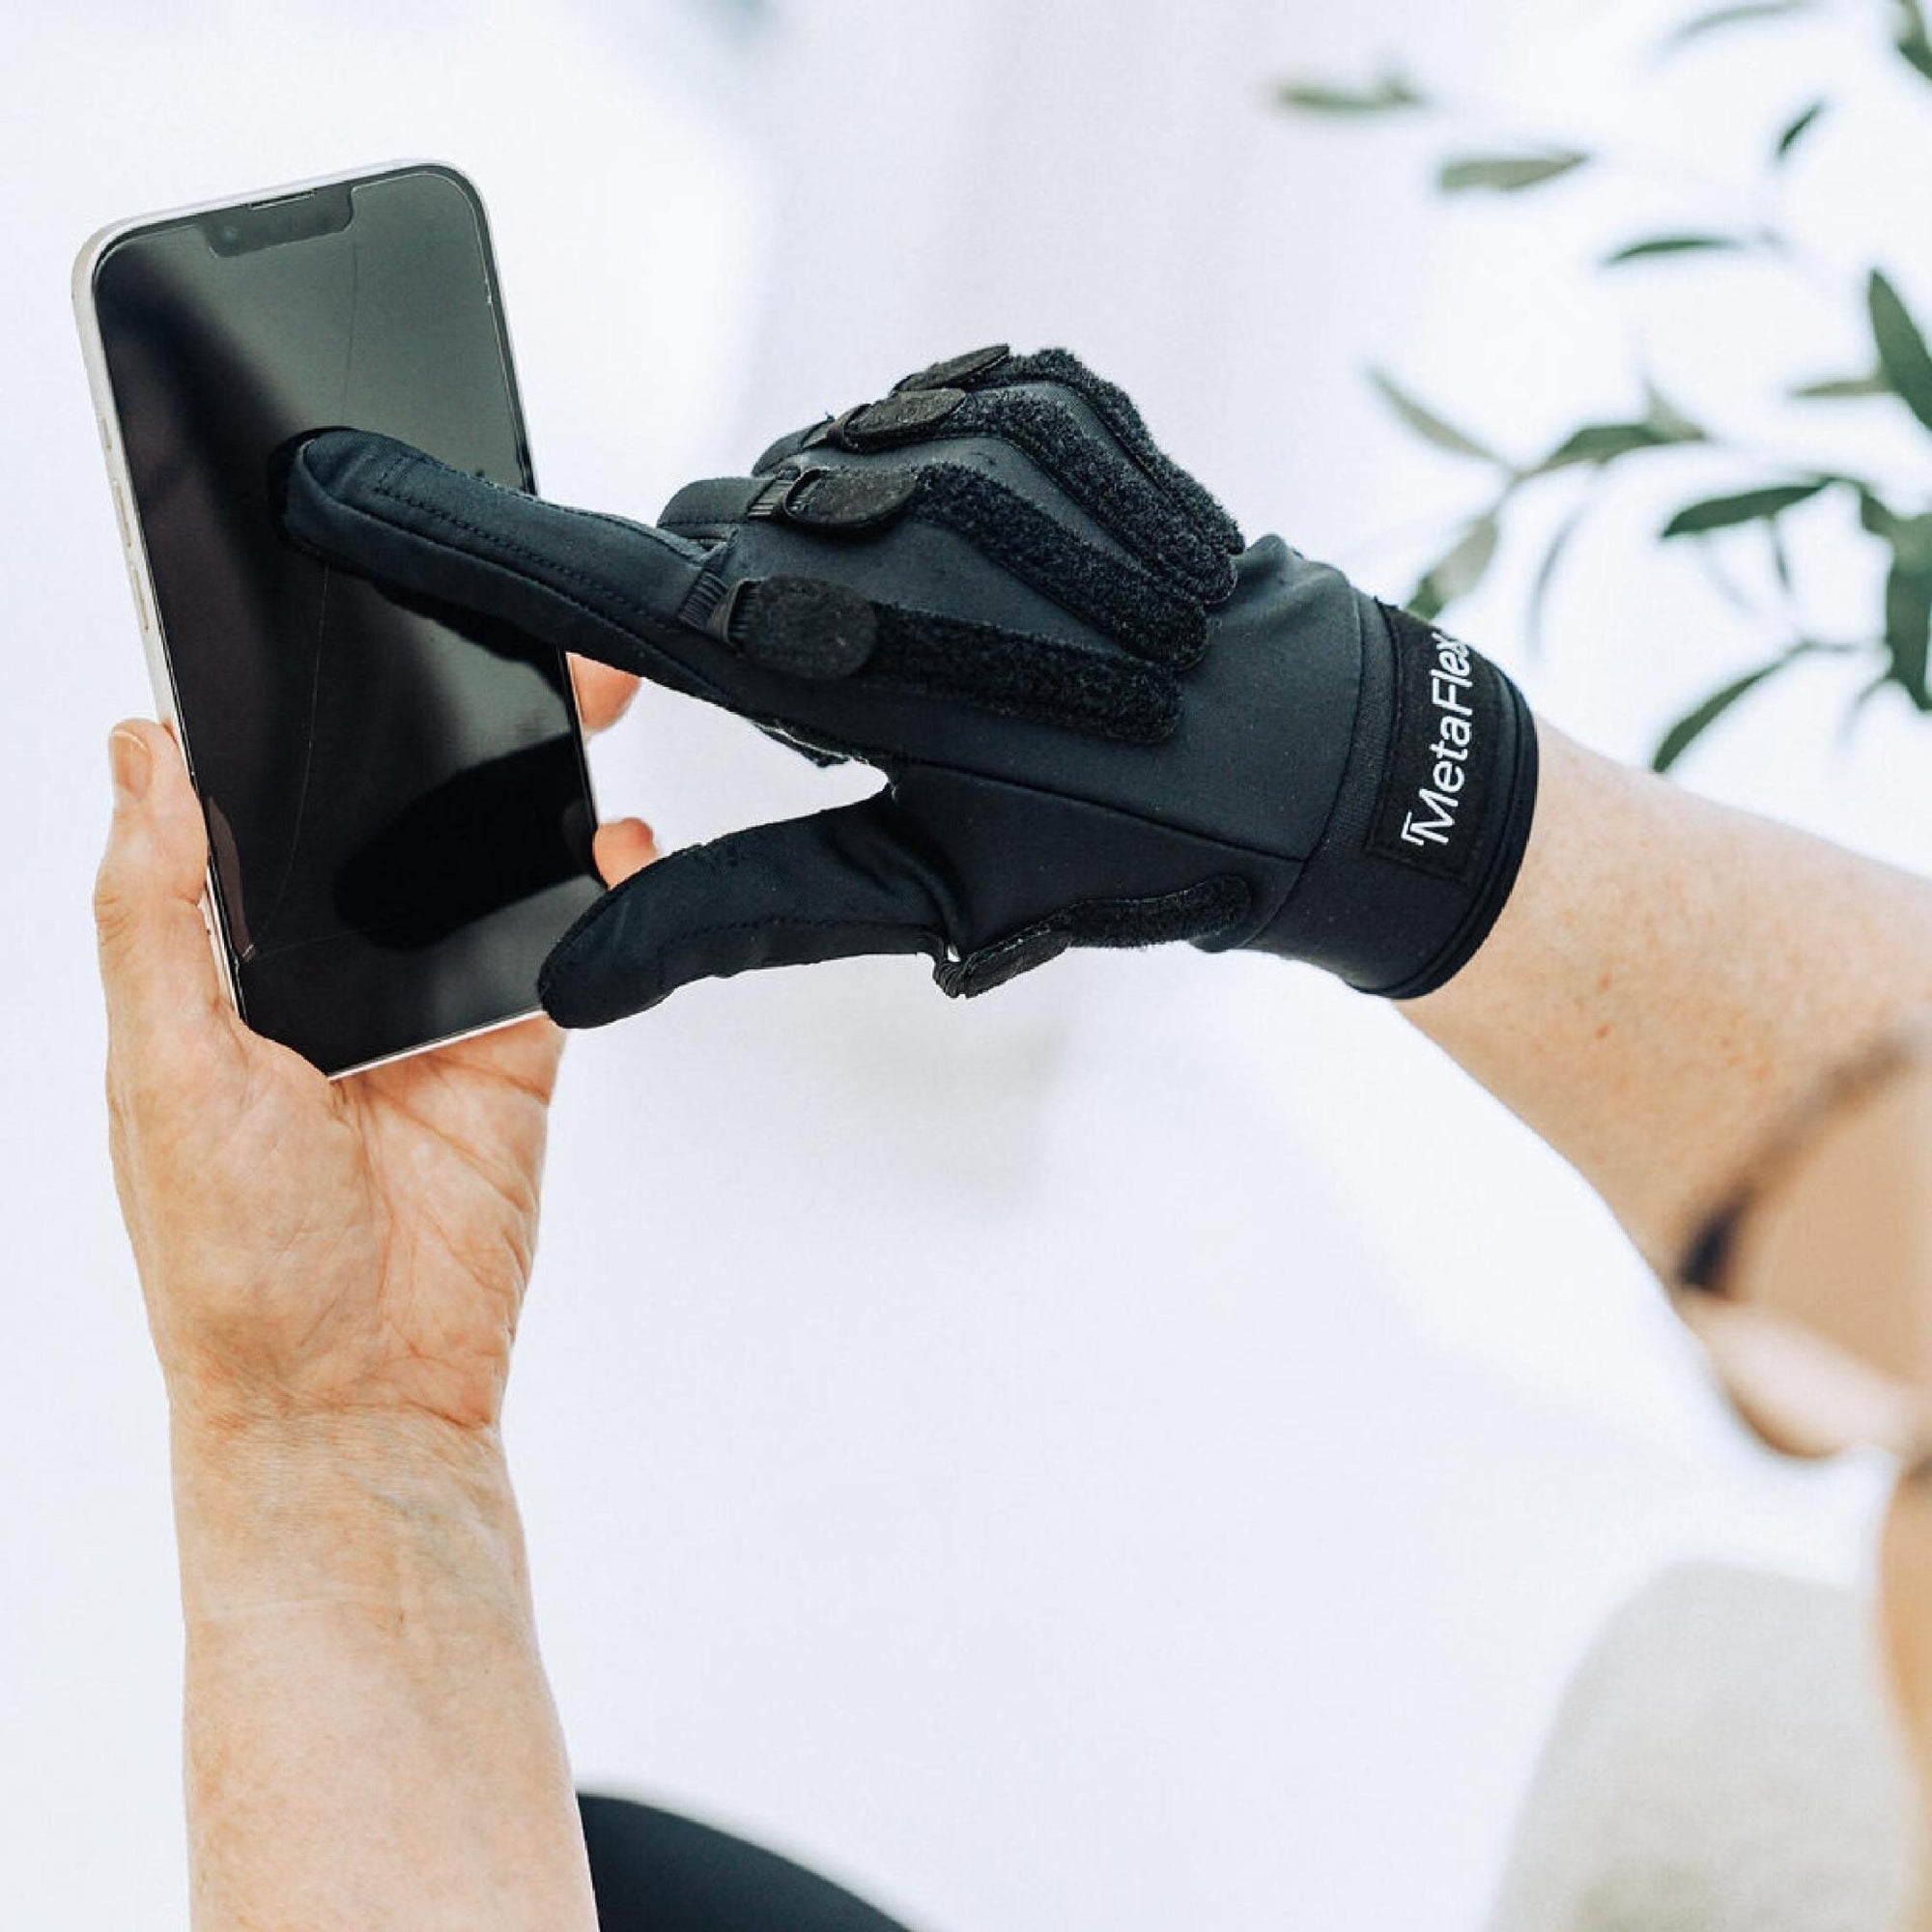 Senior swipes their phone unlocked easily wearing the comfortable MetaFlex grip strengthener compression gloves